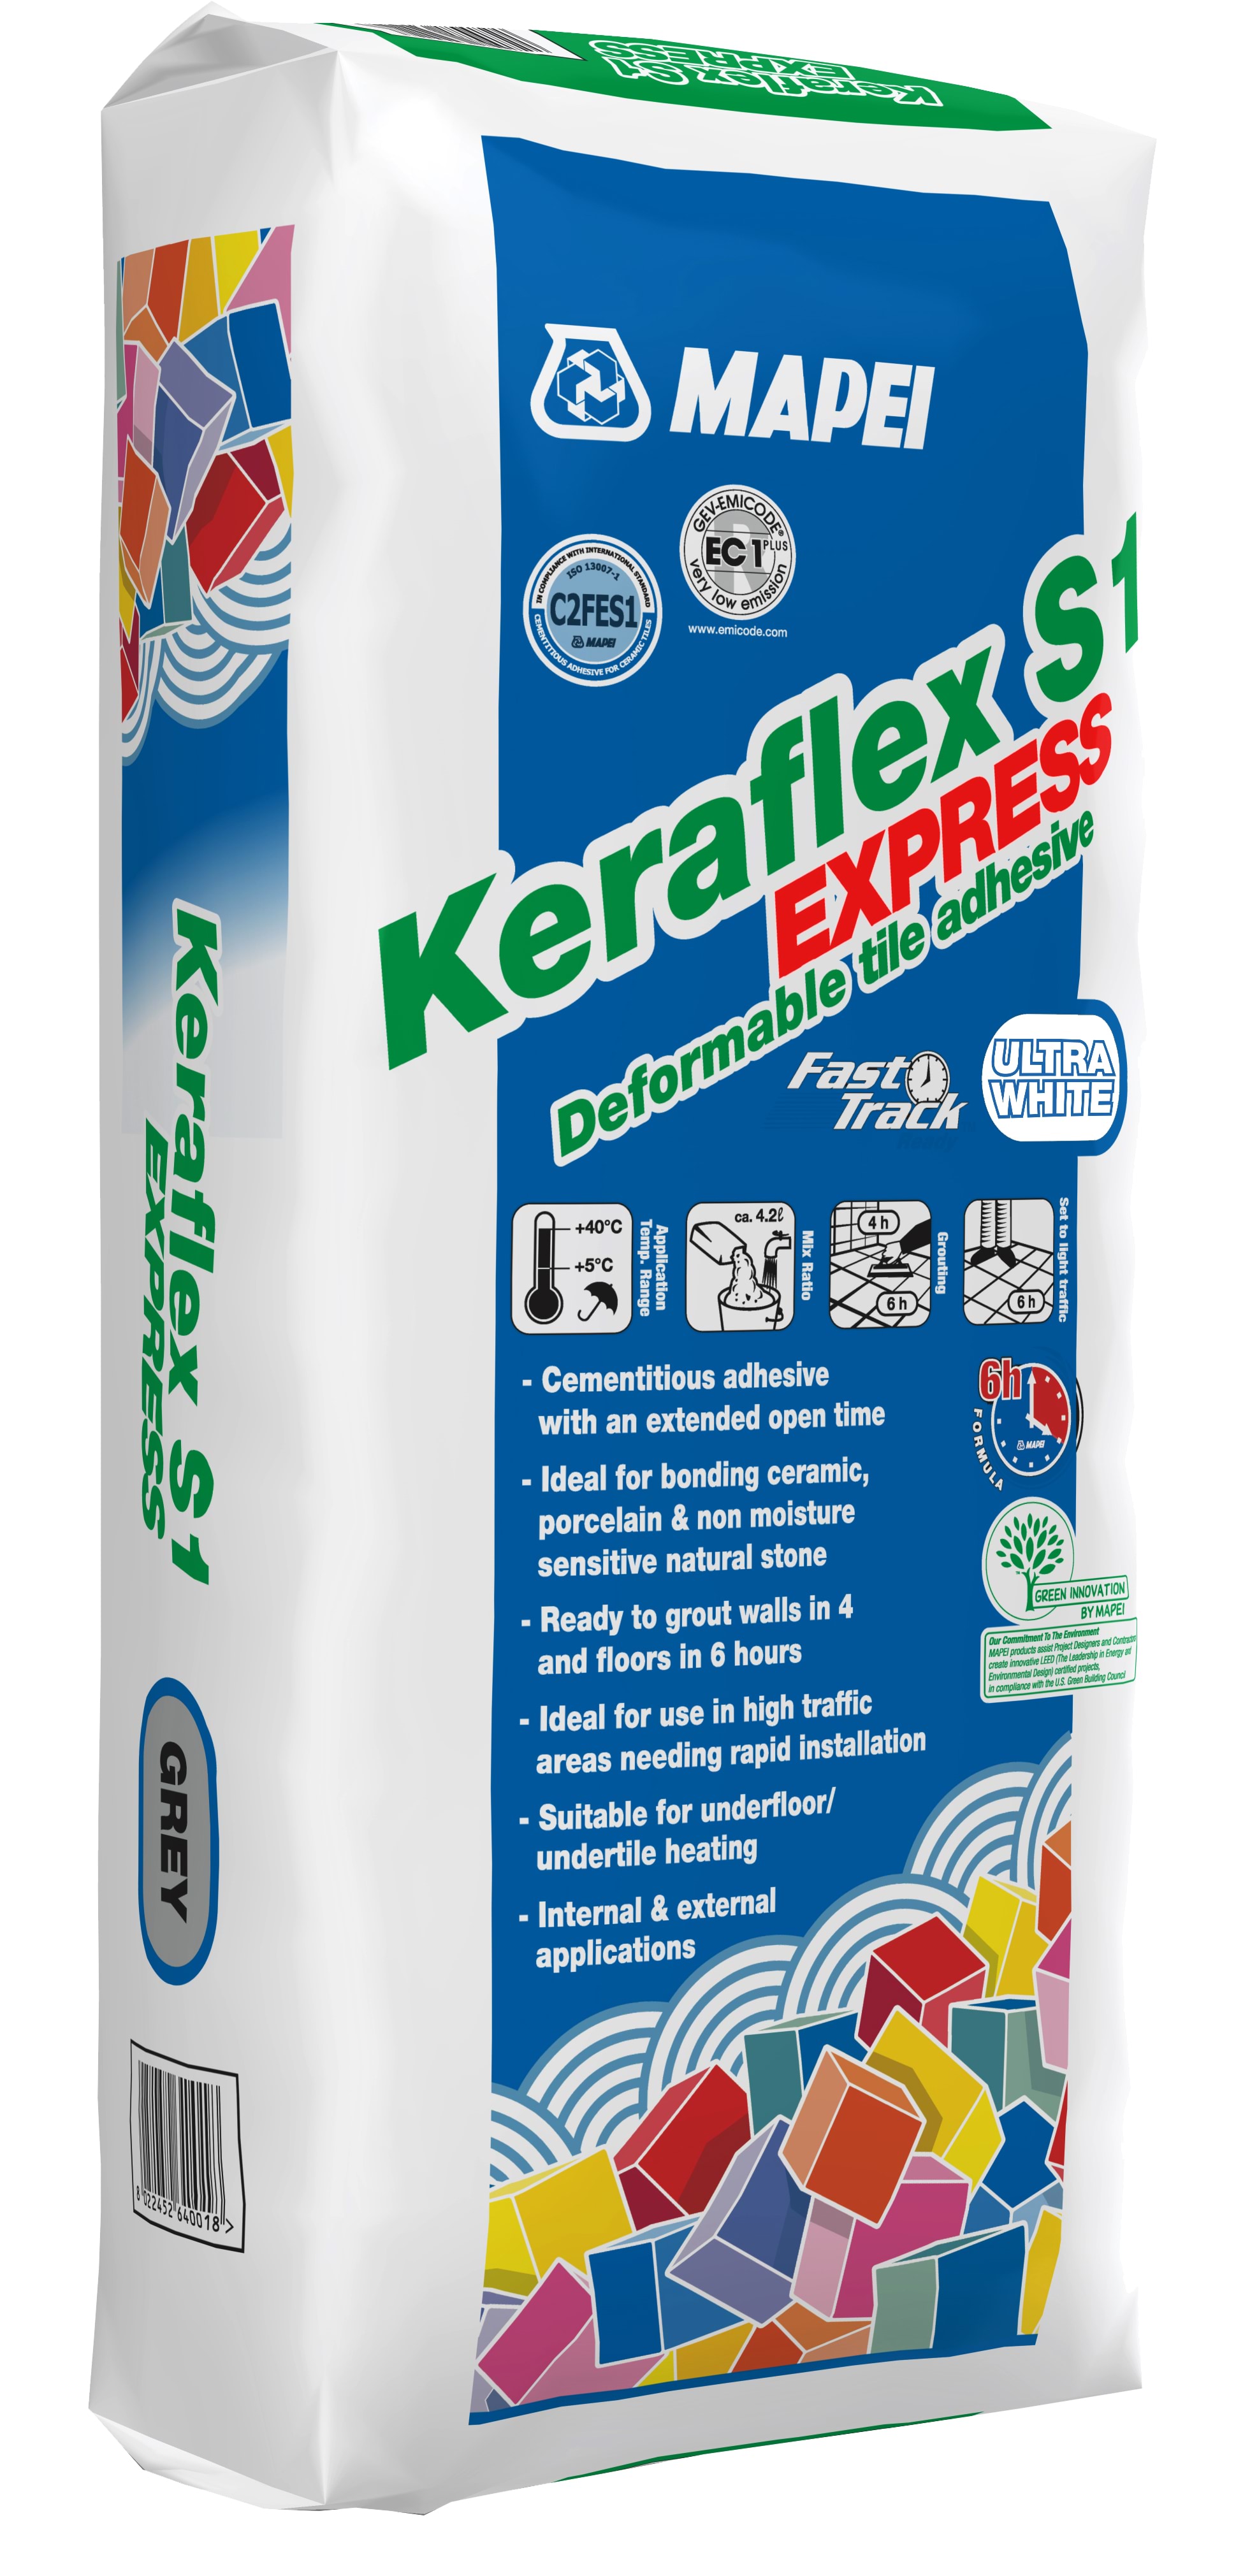 KERAFLEX S1 EXPRESS